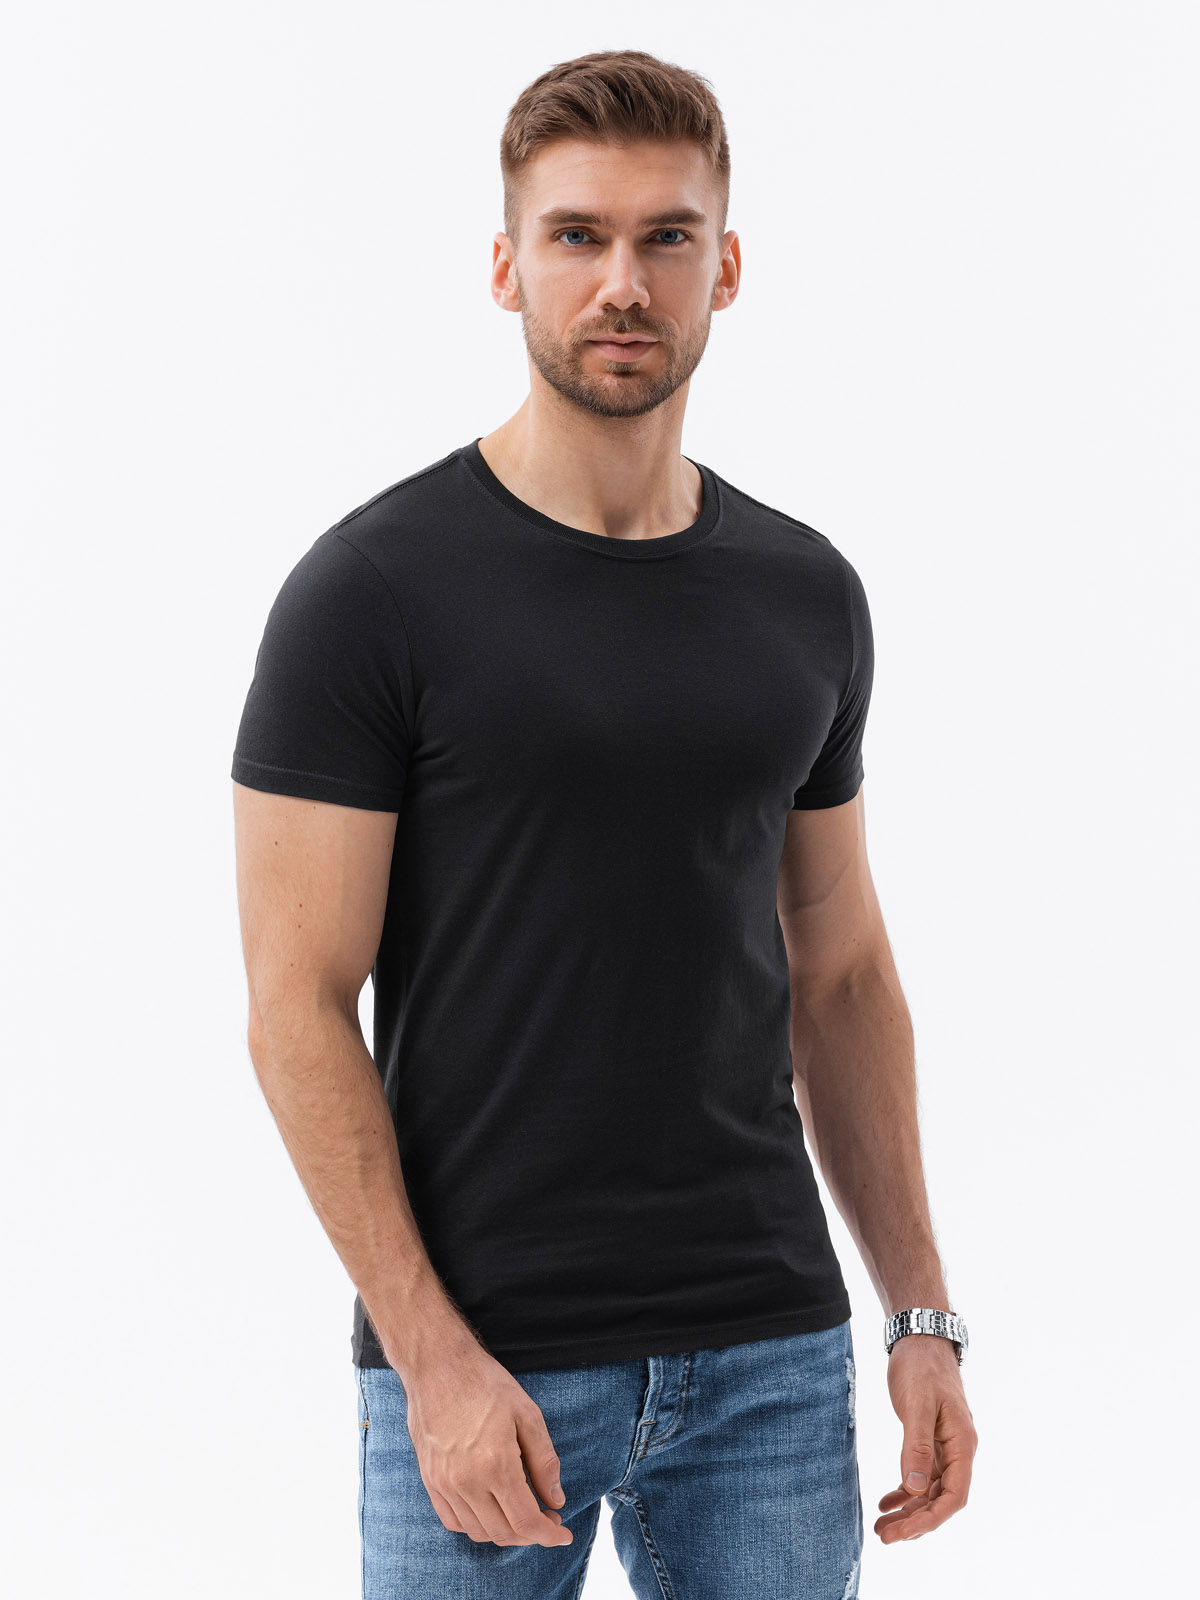 Men's plain t-shirt S1370 - black | MODONE wholesale - Clothing For Men